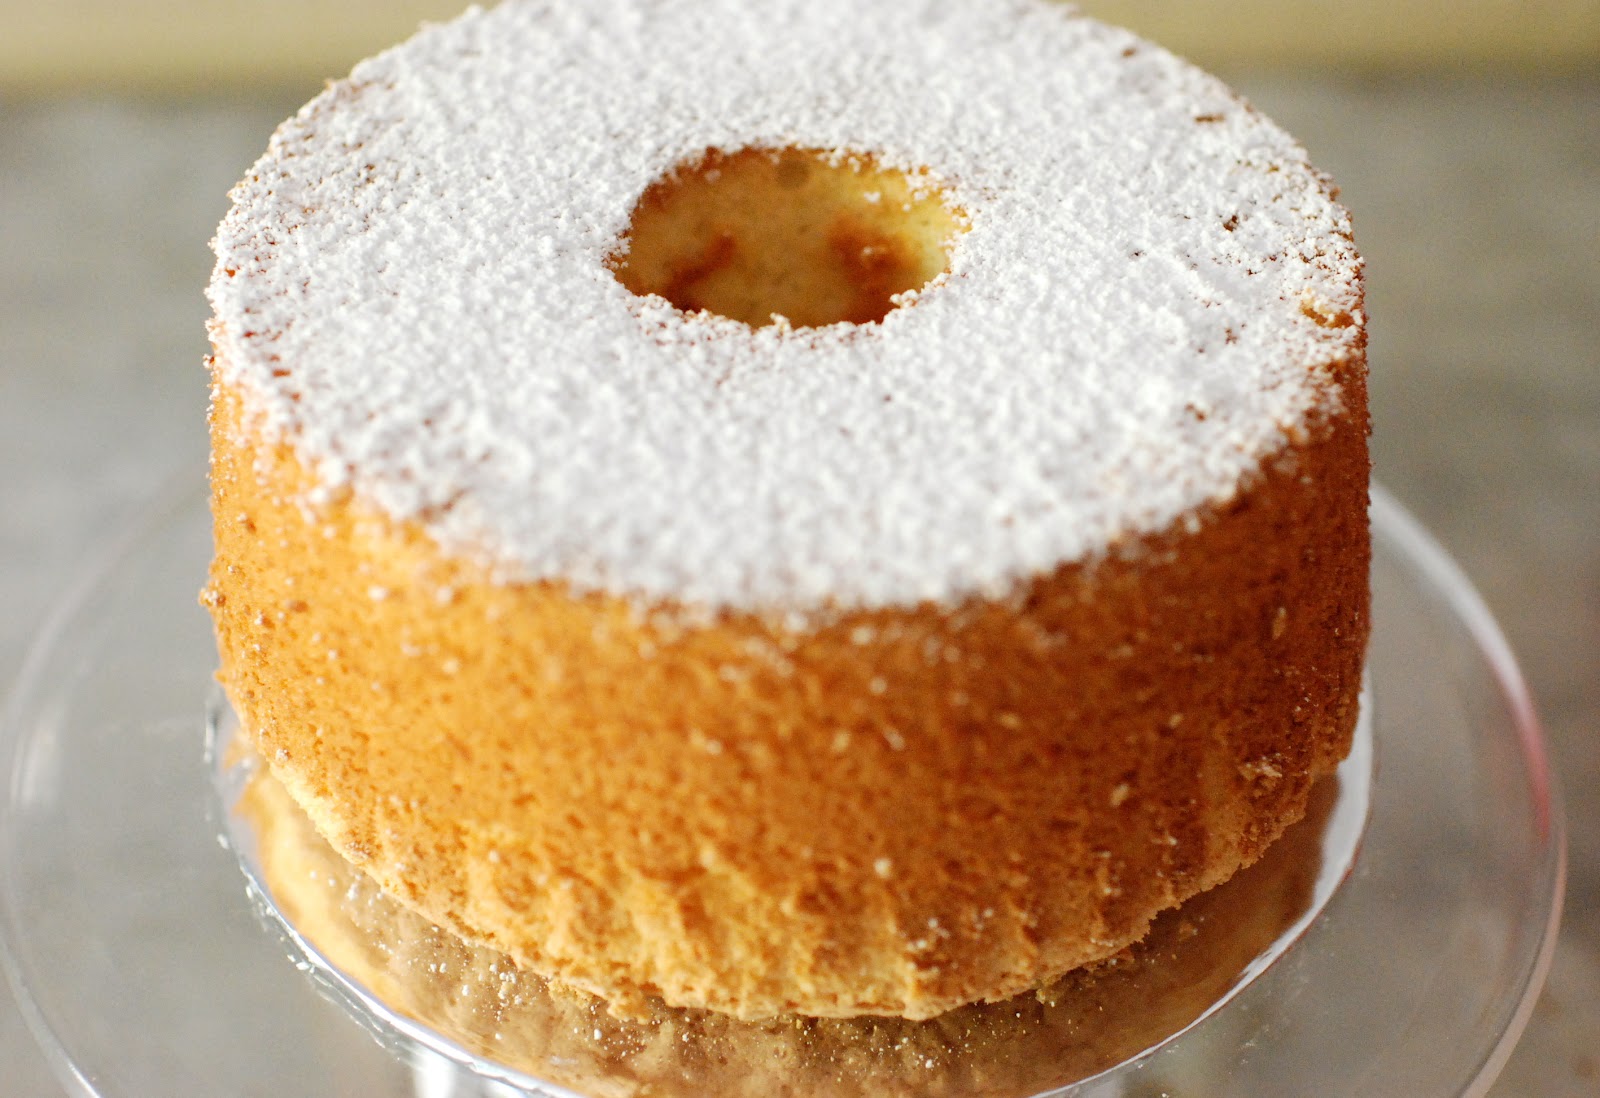 Orange Chiffon Cake with powdered sugar